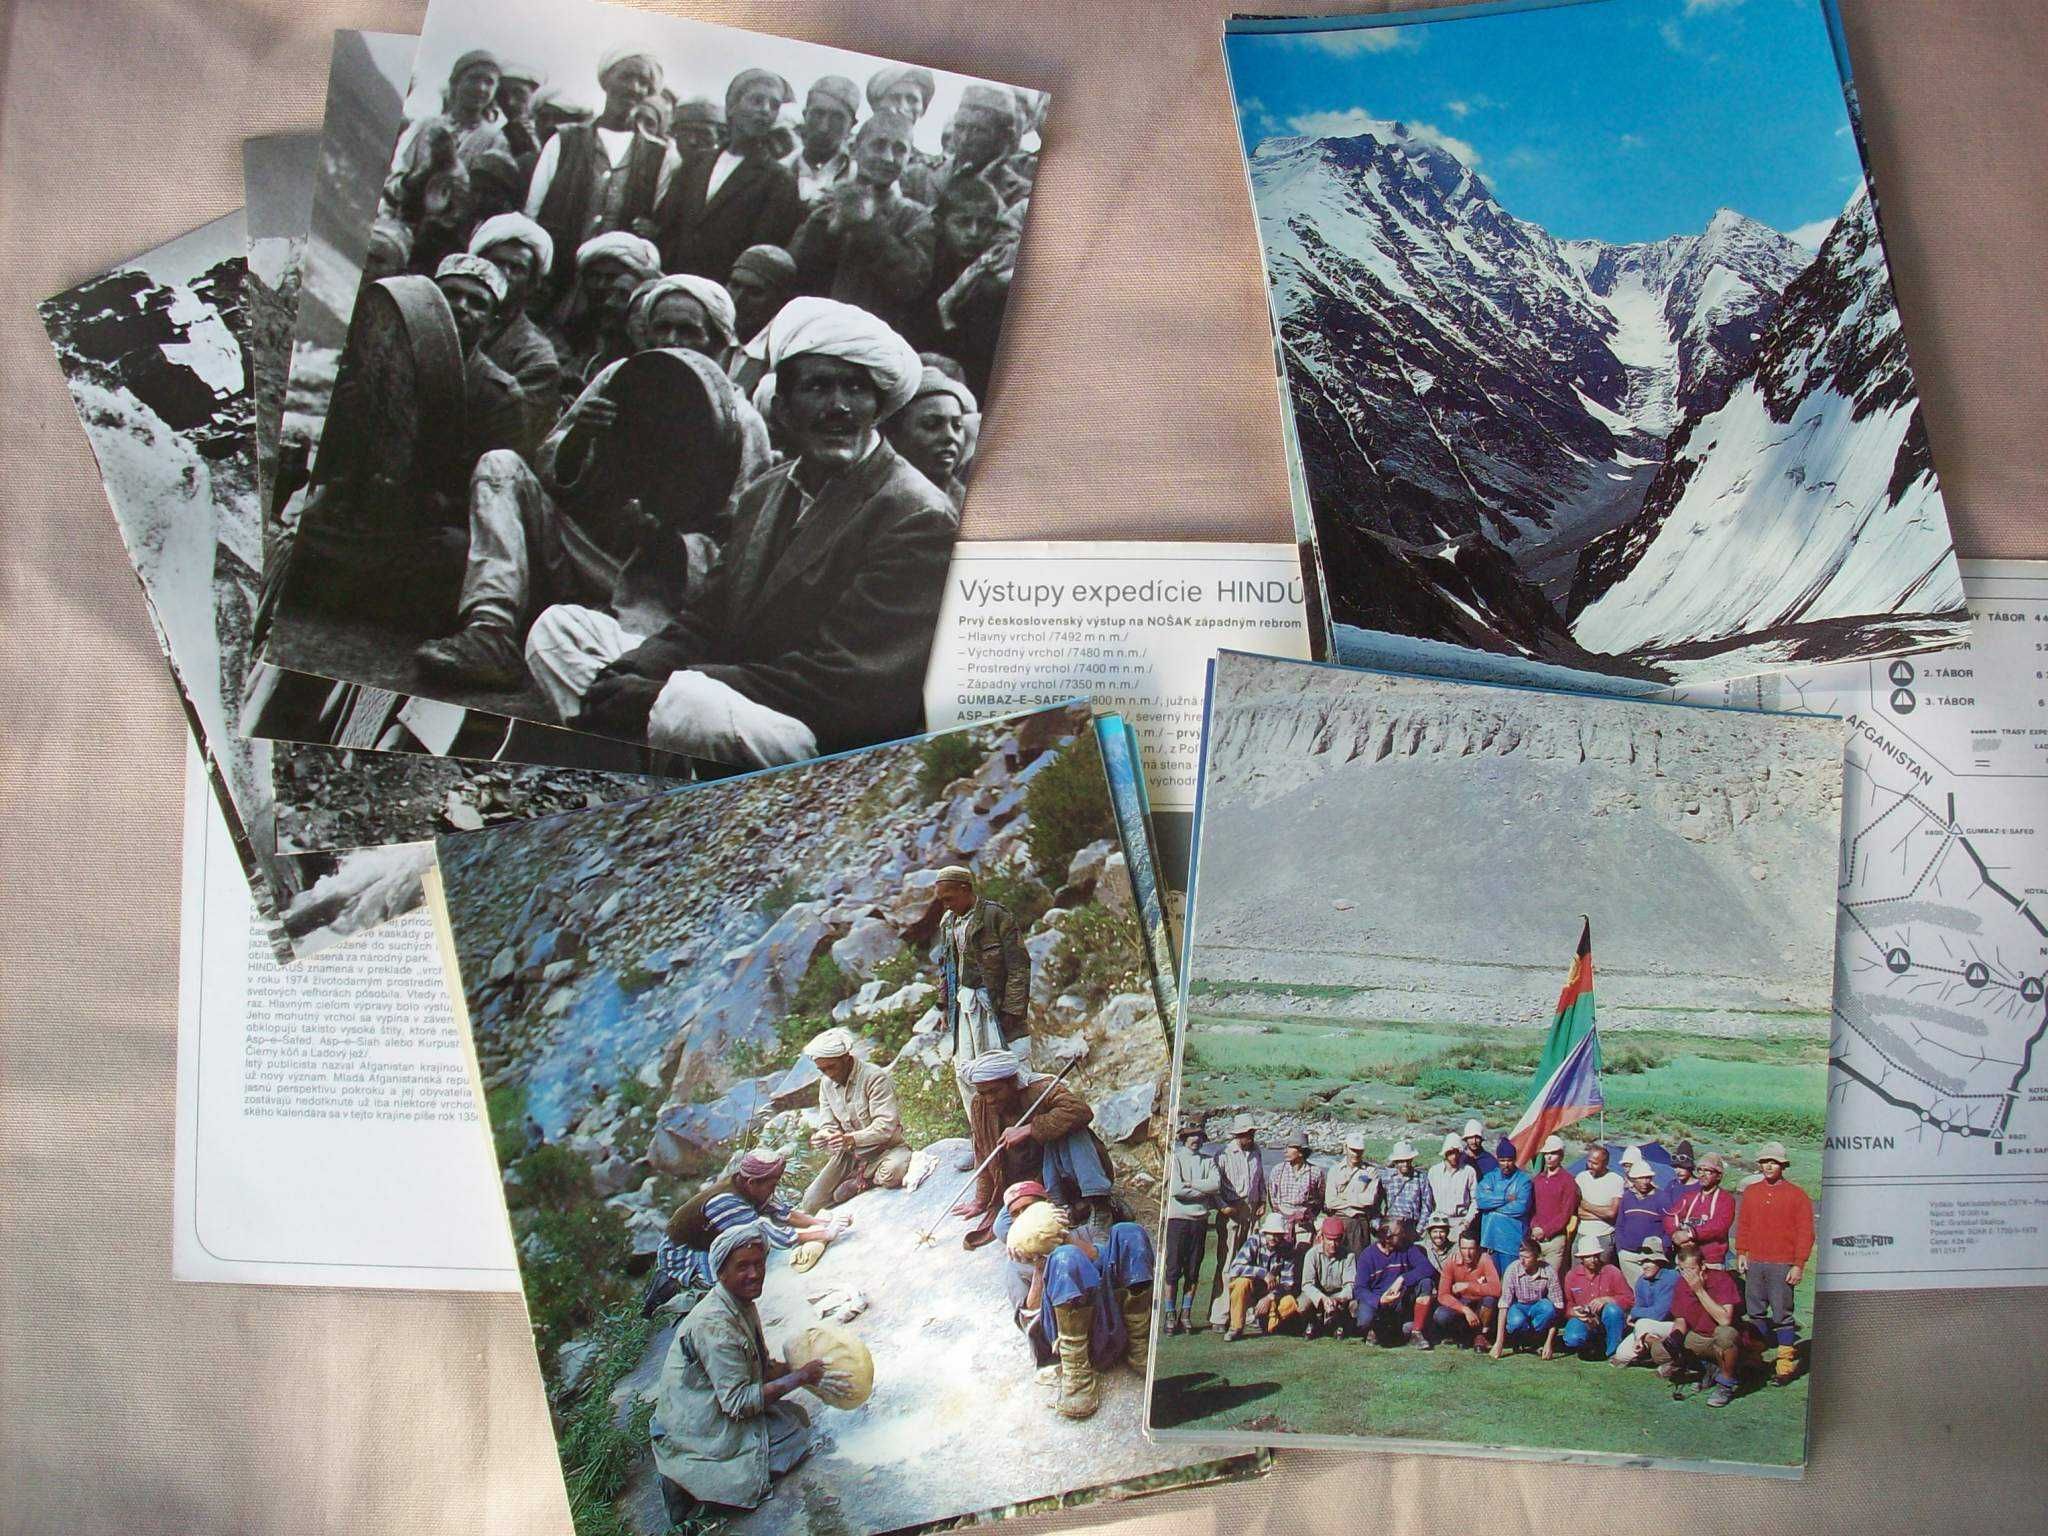 Hindukusz 1974 + Makalu 1976, 2 albumy fotografii.